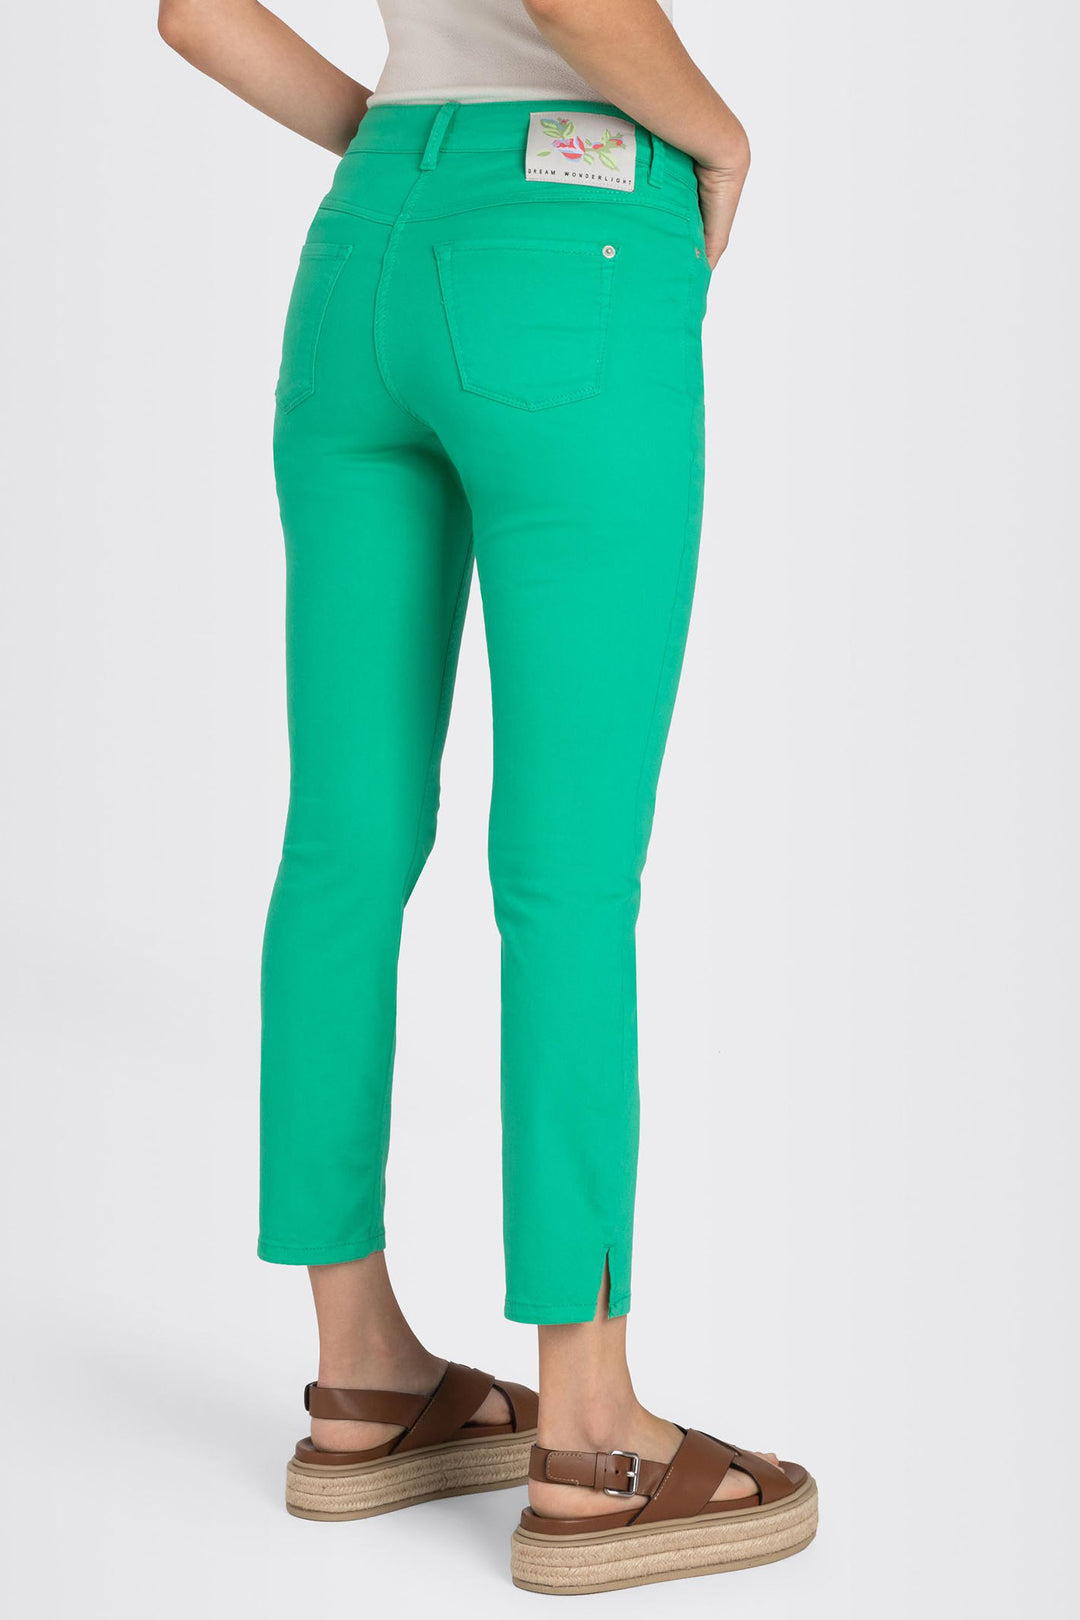 Mac 5492-00-0351 621R Dream Summer Bright Green Light Denim Jeans - Olivia Grace Fashion